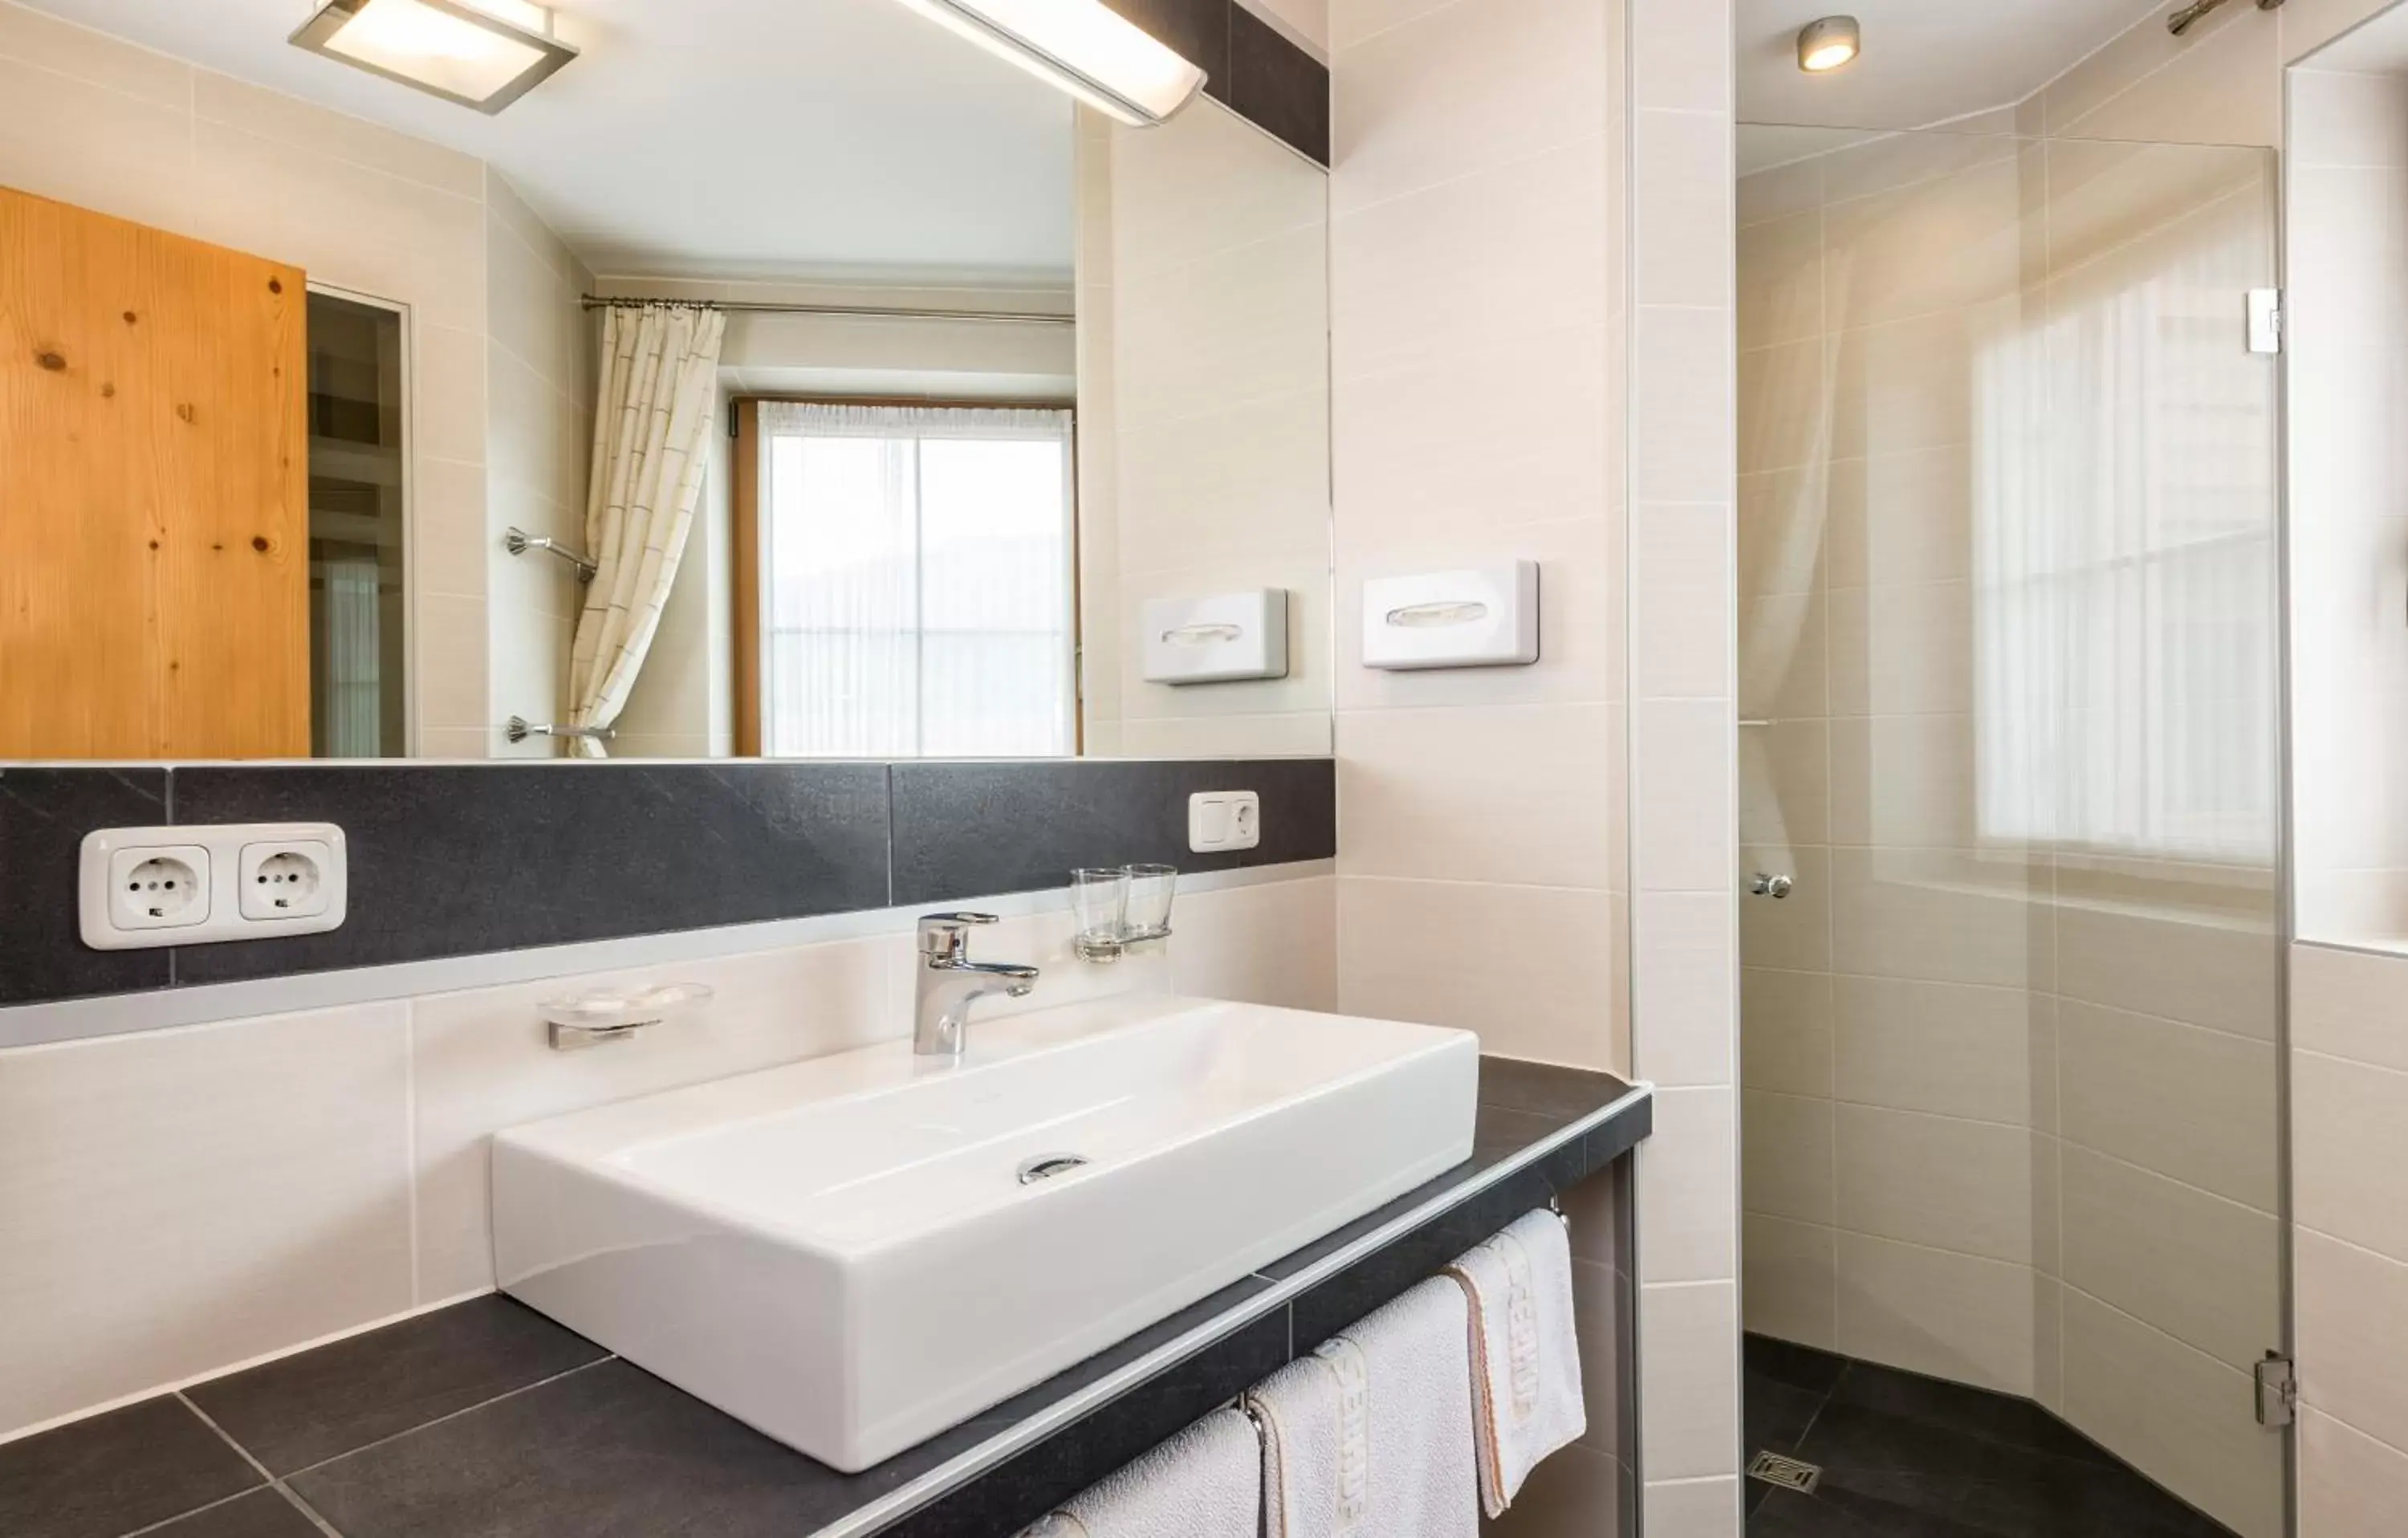 Bathroom in Hotel Moserhof